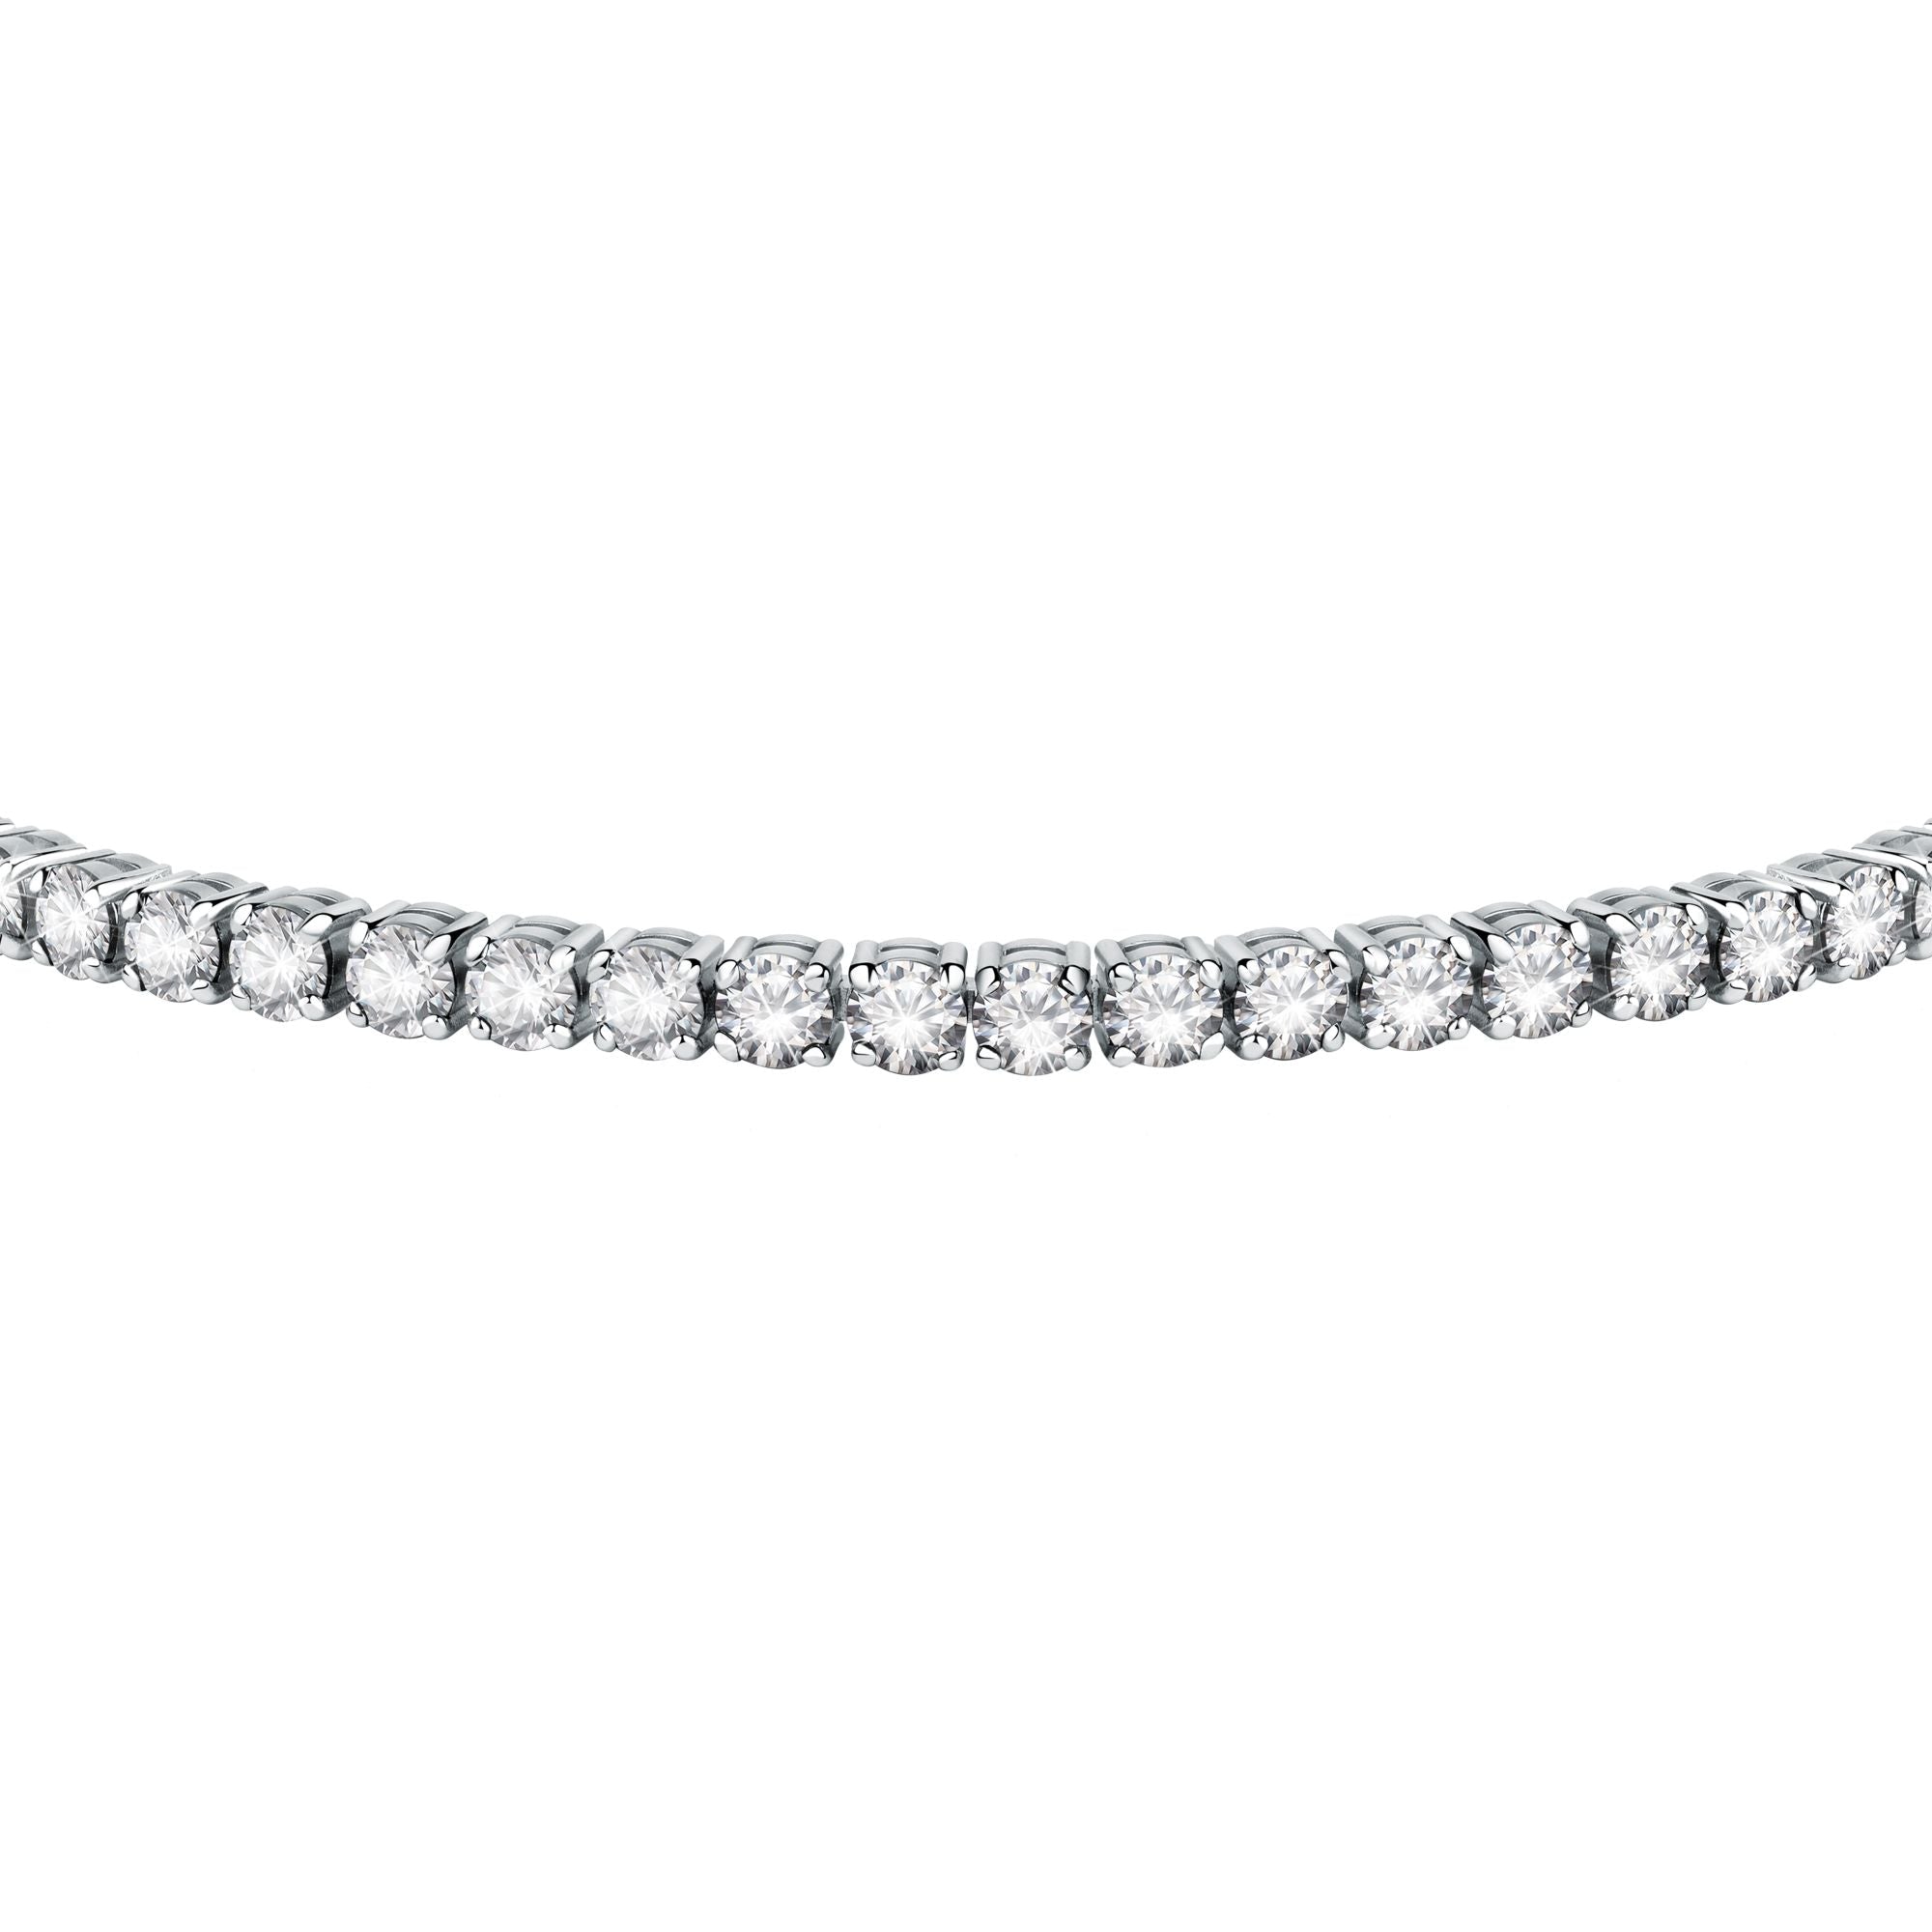 Chiara Ferragni Diamond Heart XL Stone Tennis Bracelet Bevilles Jewellers 